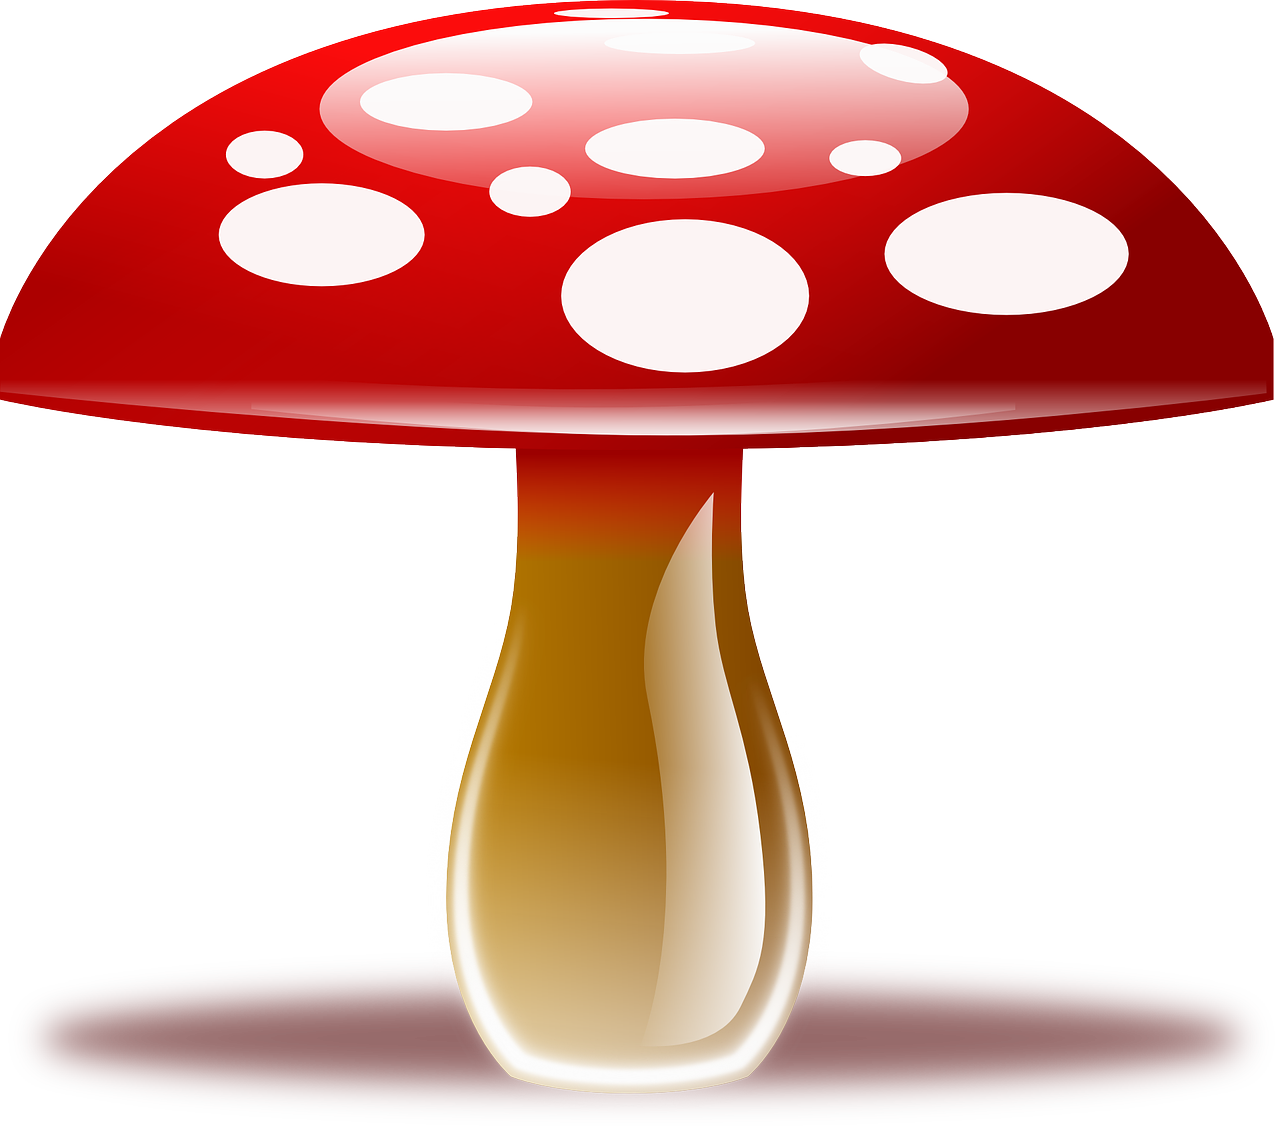 Mushroom gnome